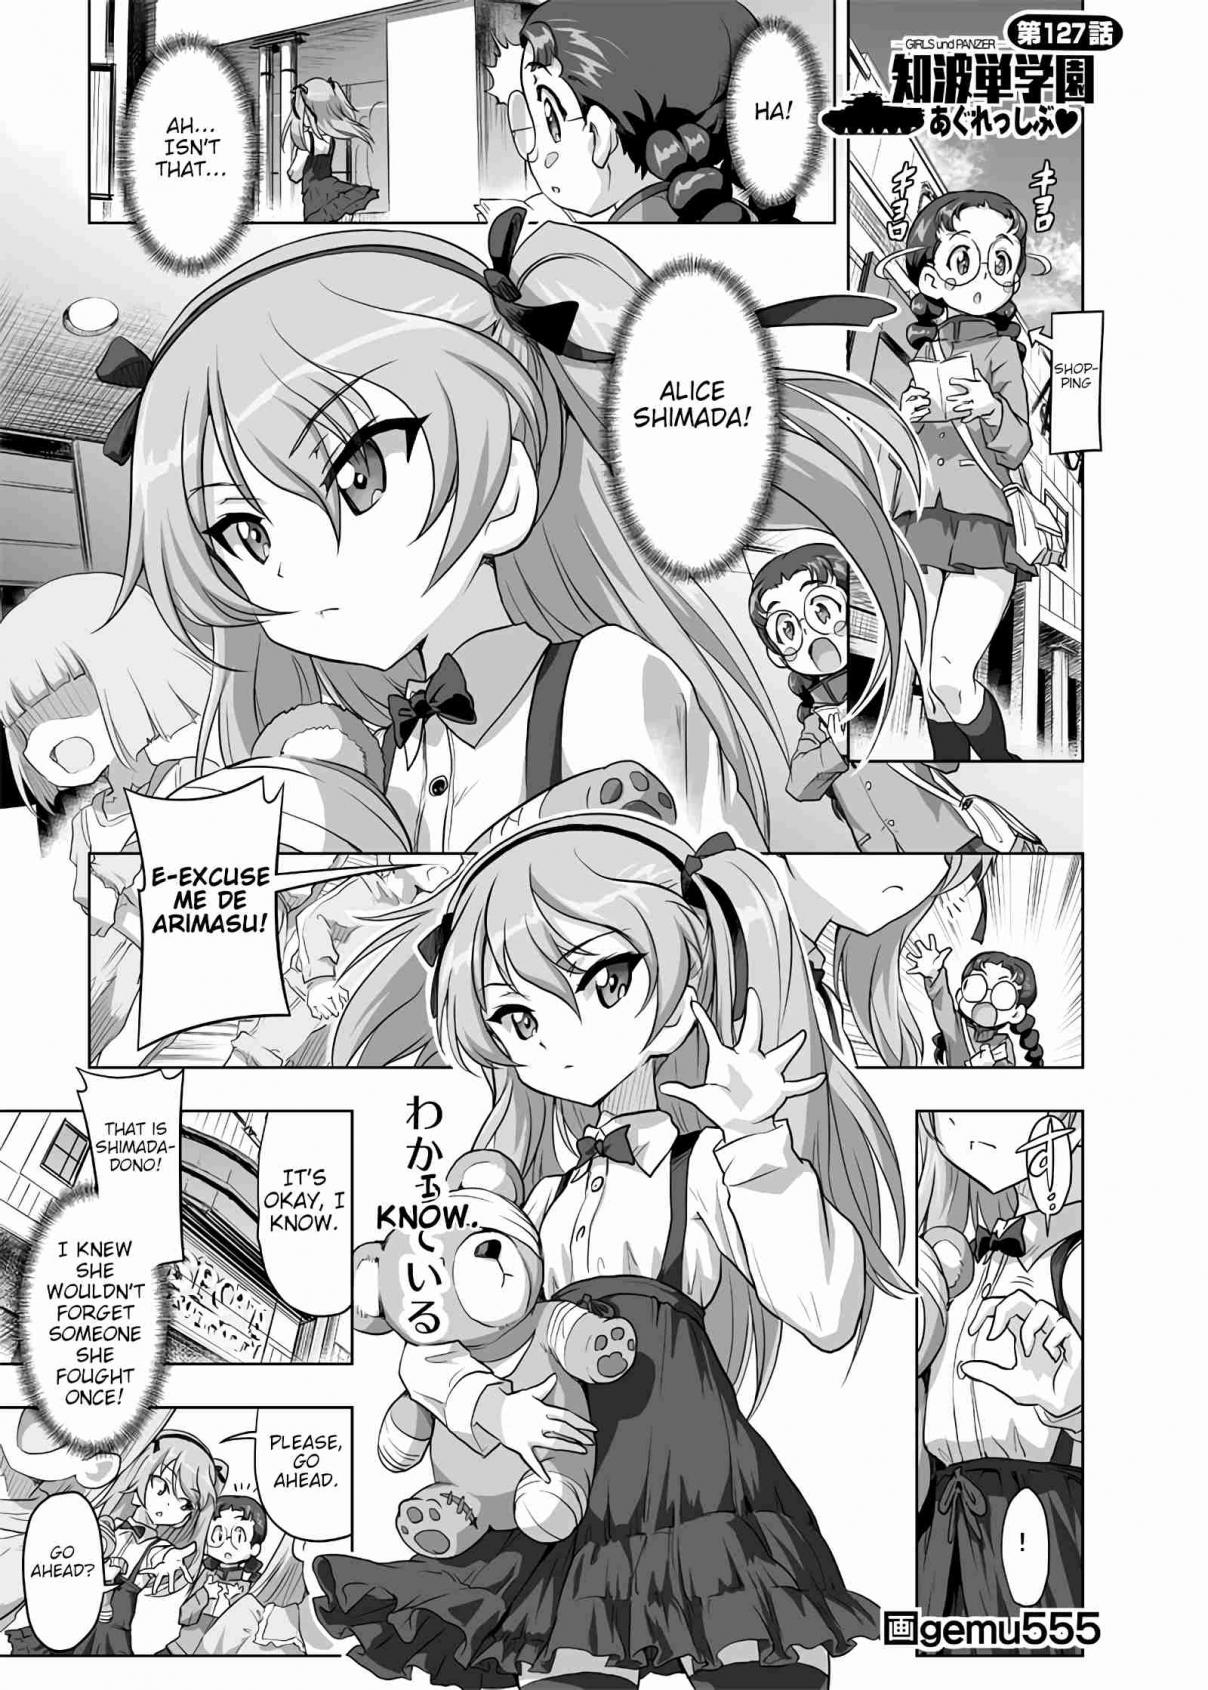 Girls und Panzer Chi HaTan Academy Aggressive (Doujinshi) Vol. 1 Ch. 127